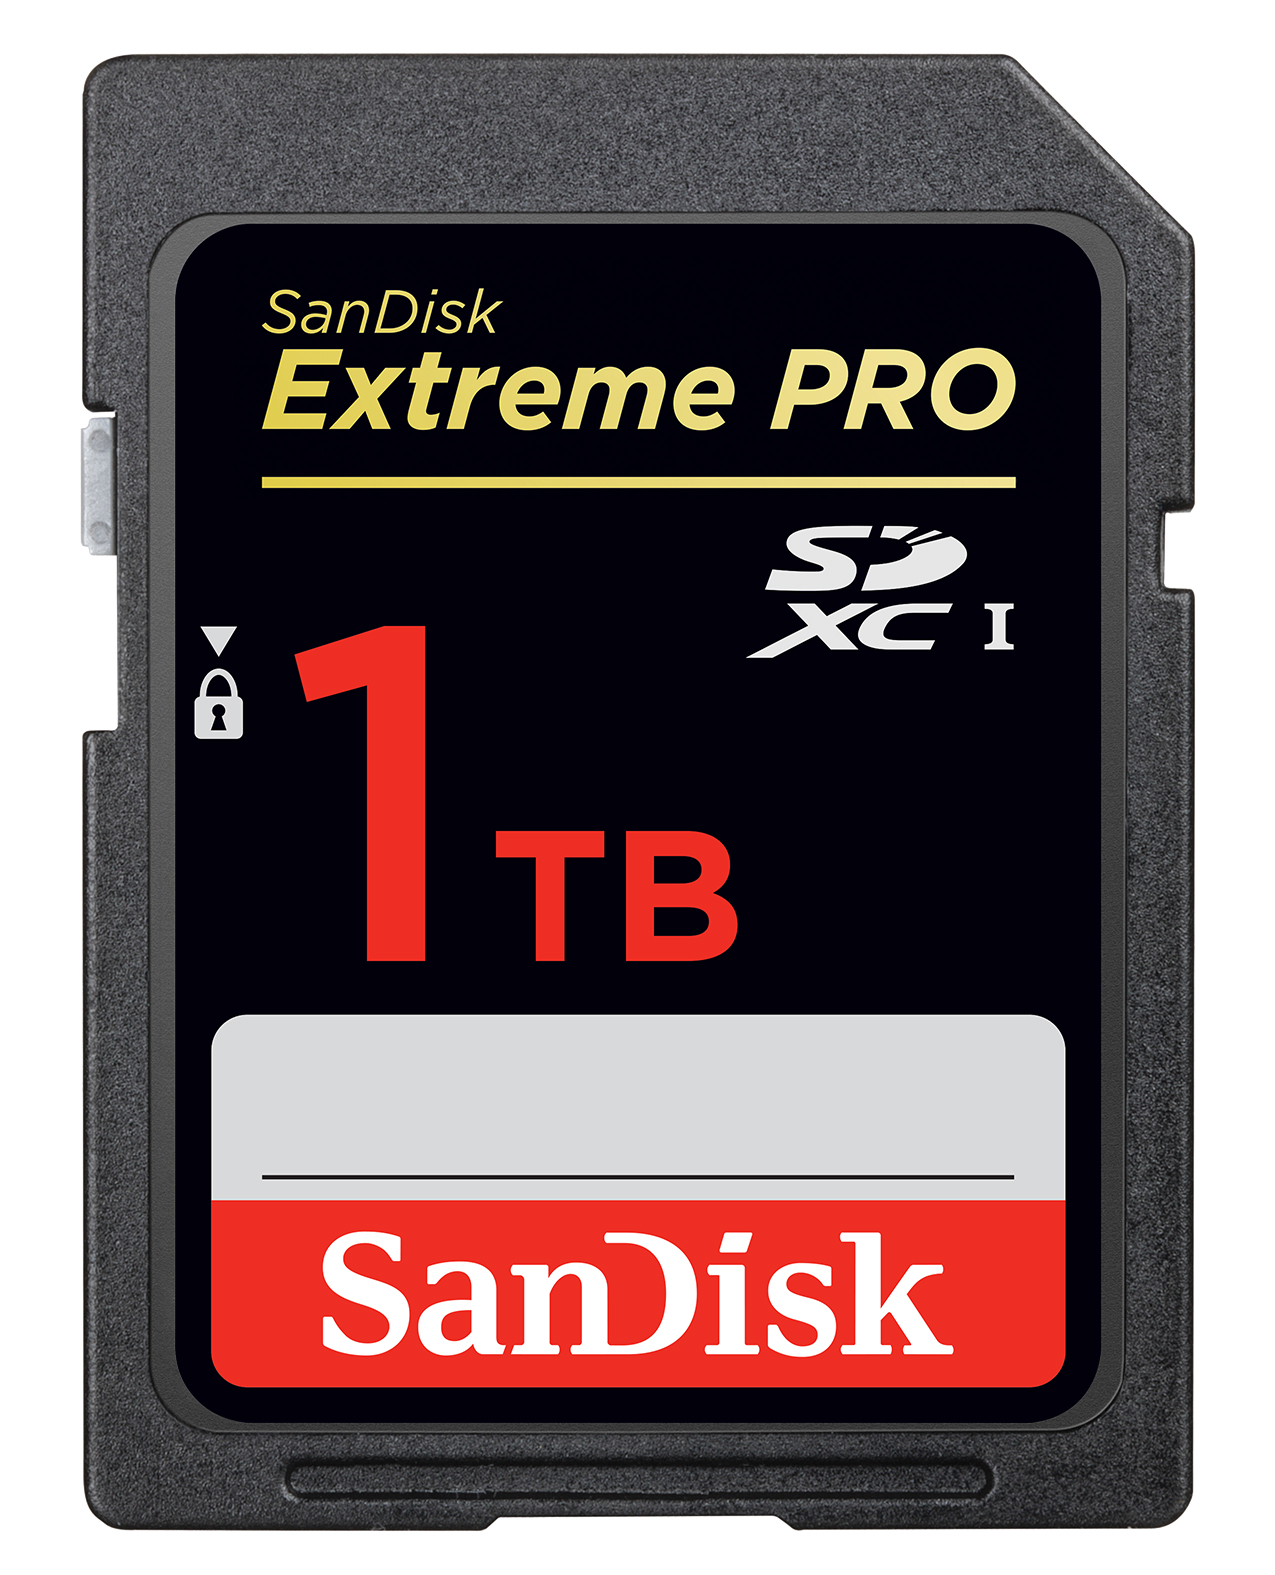 SanDisk 1TB SD card prototype